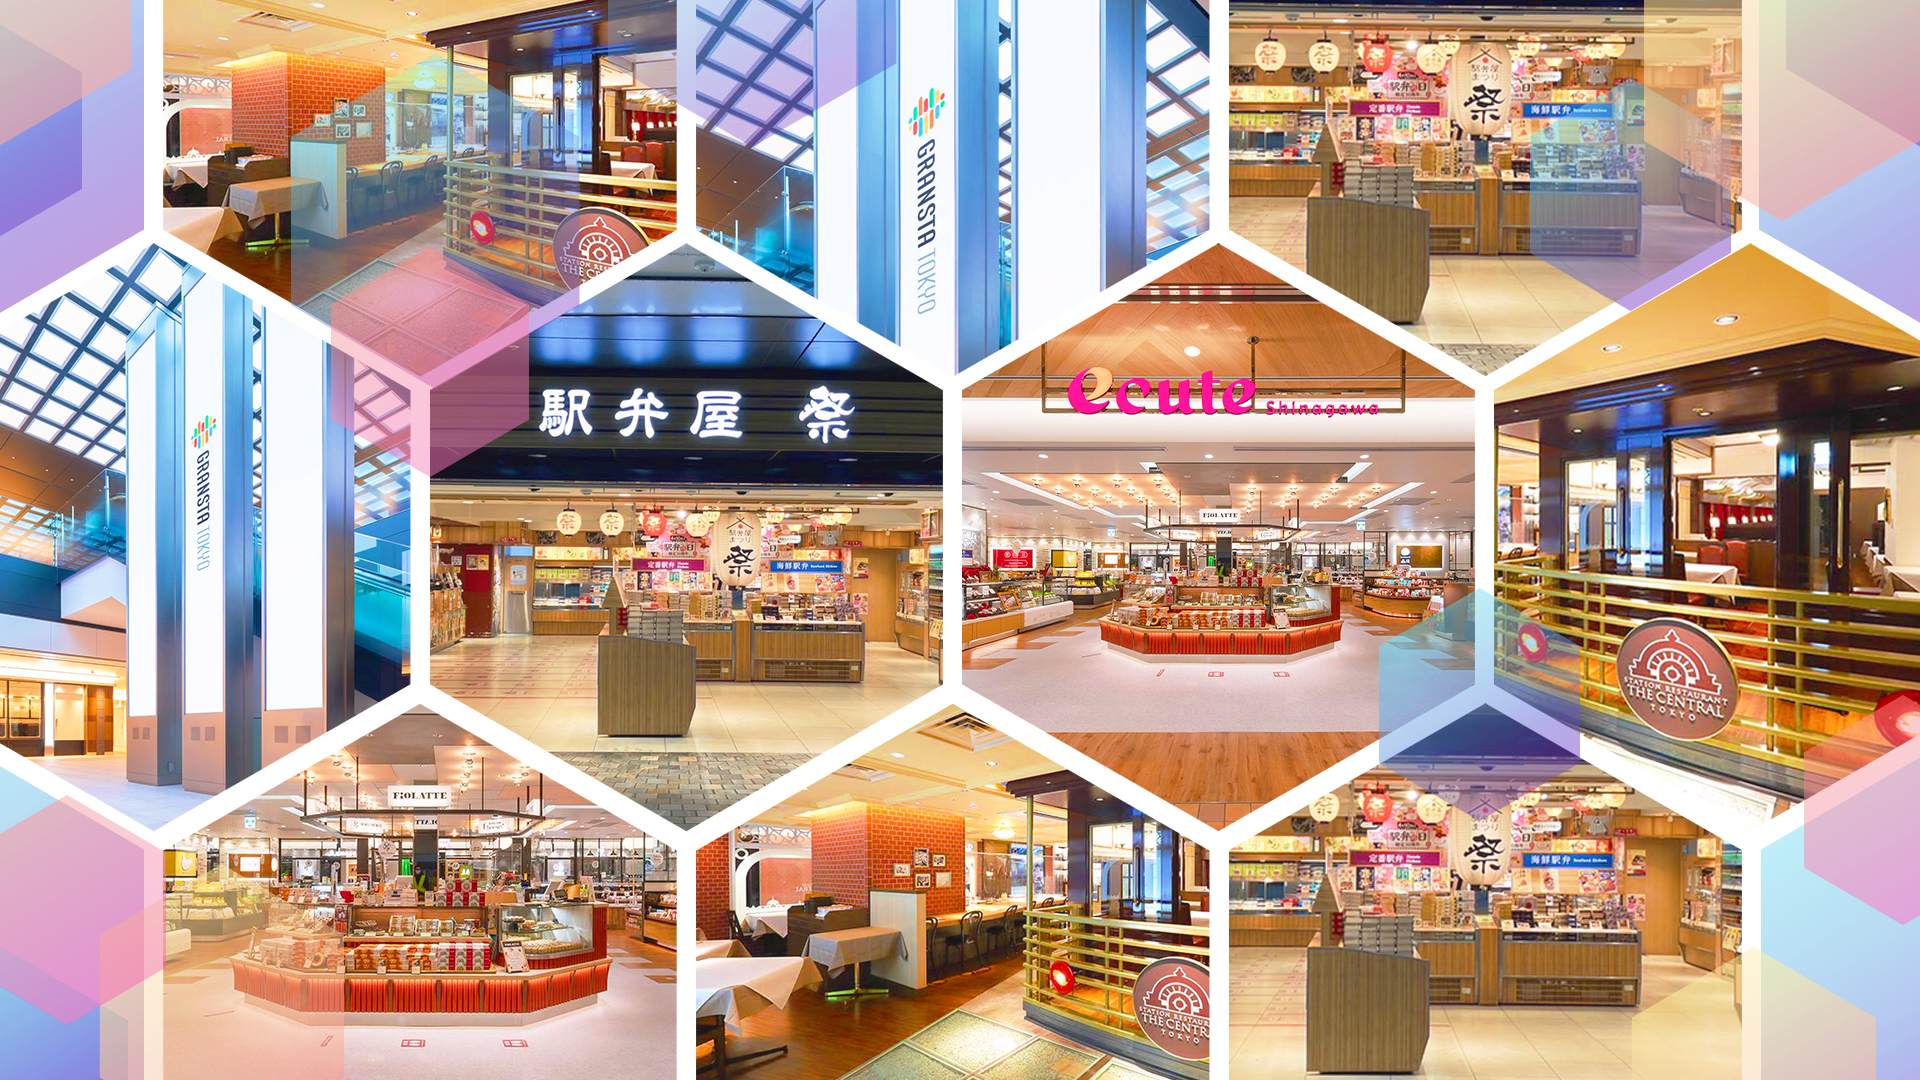 Tokyo Shopping Guide: Pokemon Center - Asking For Trouble